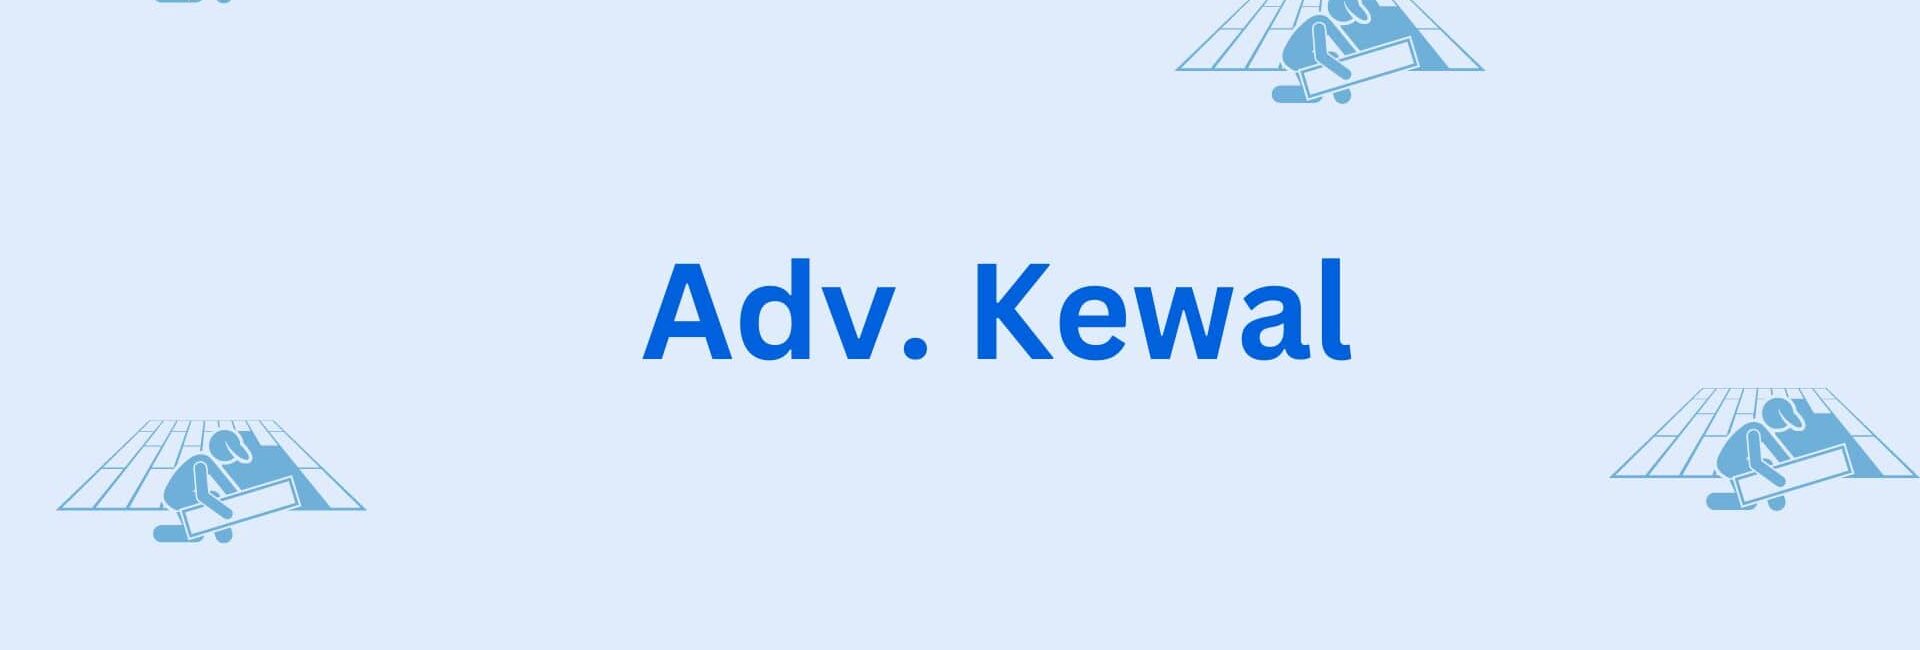 Adv. Kewal - Flooring Contractors in Hisar